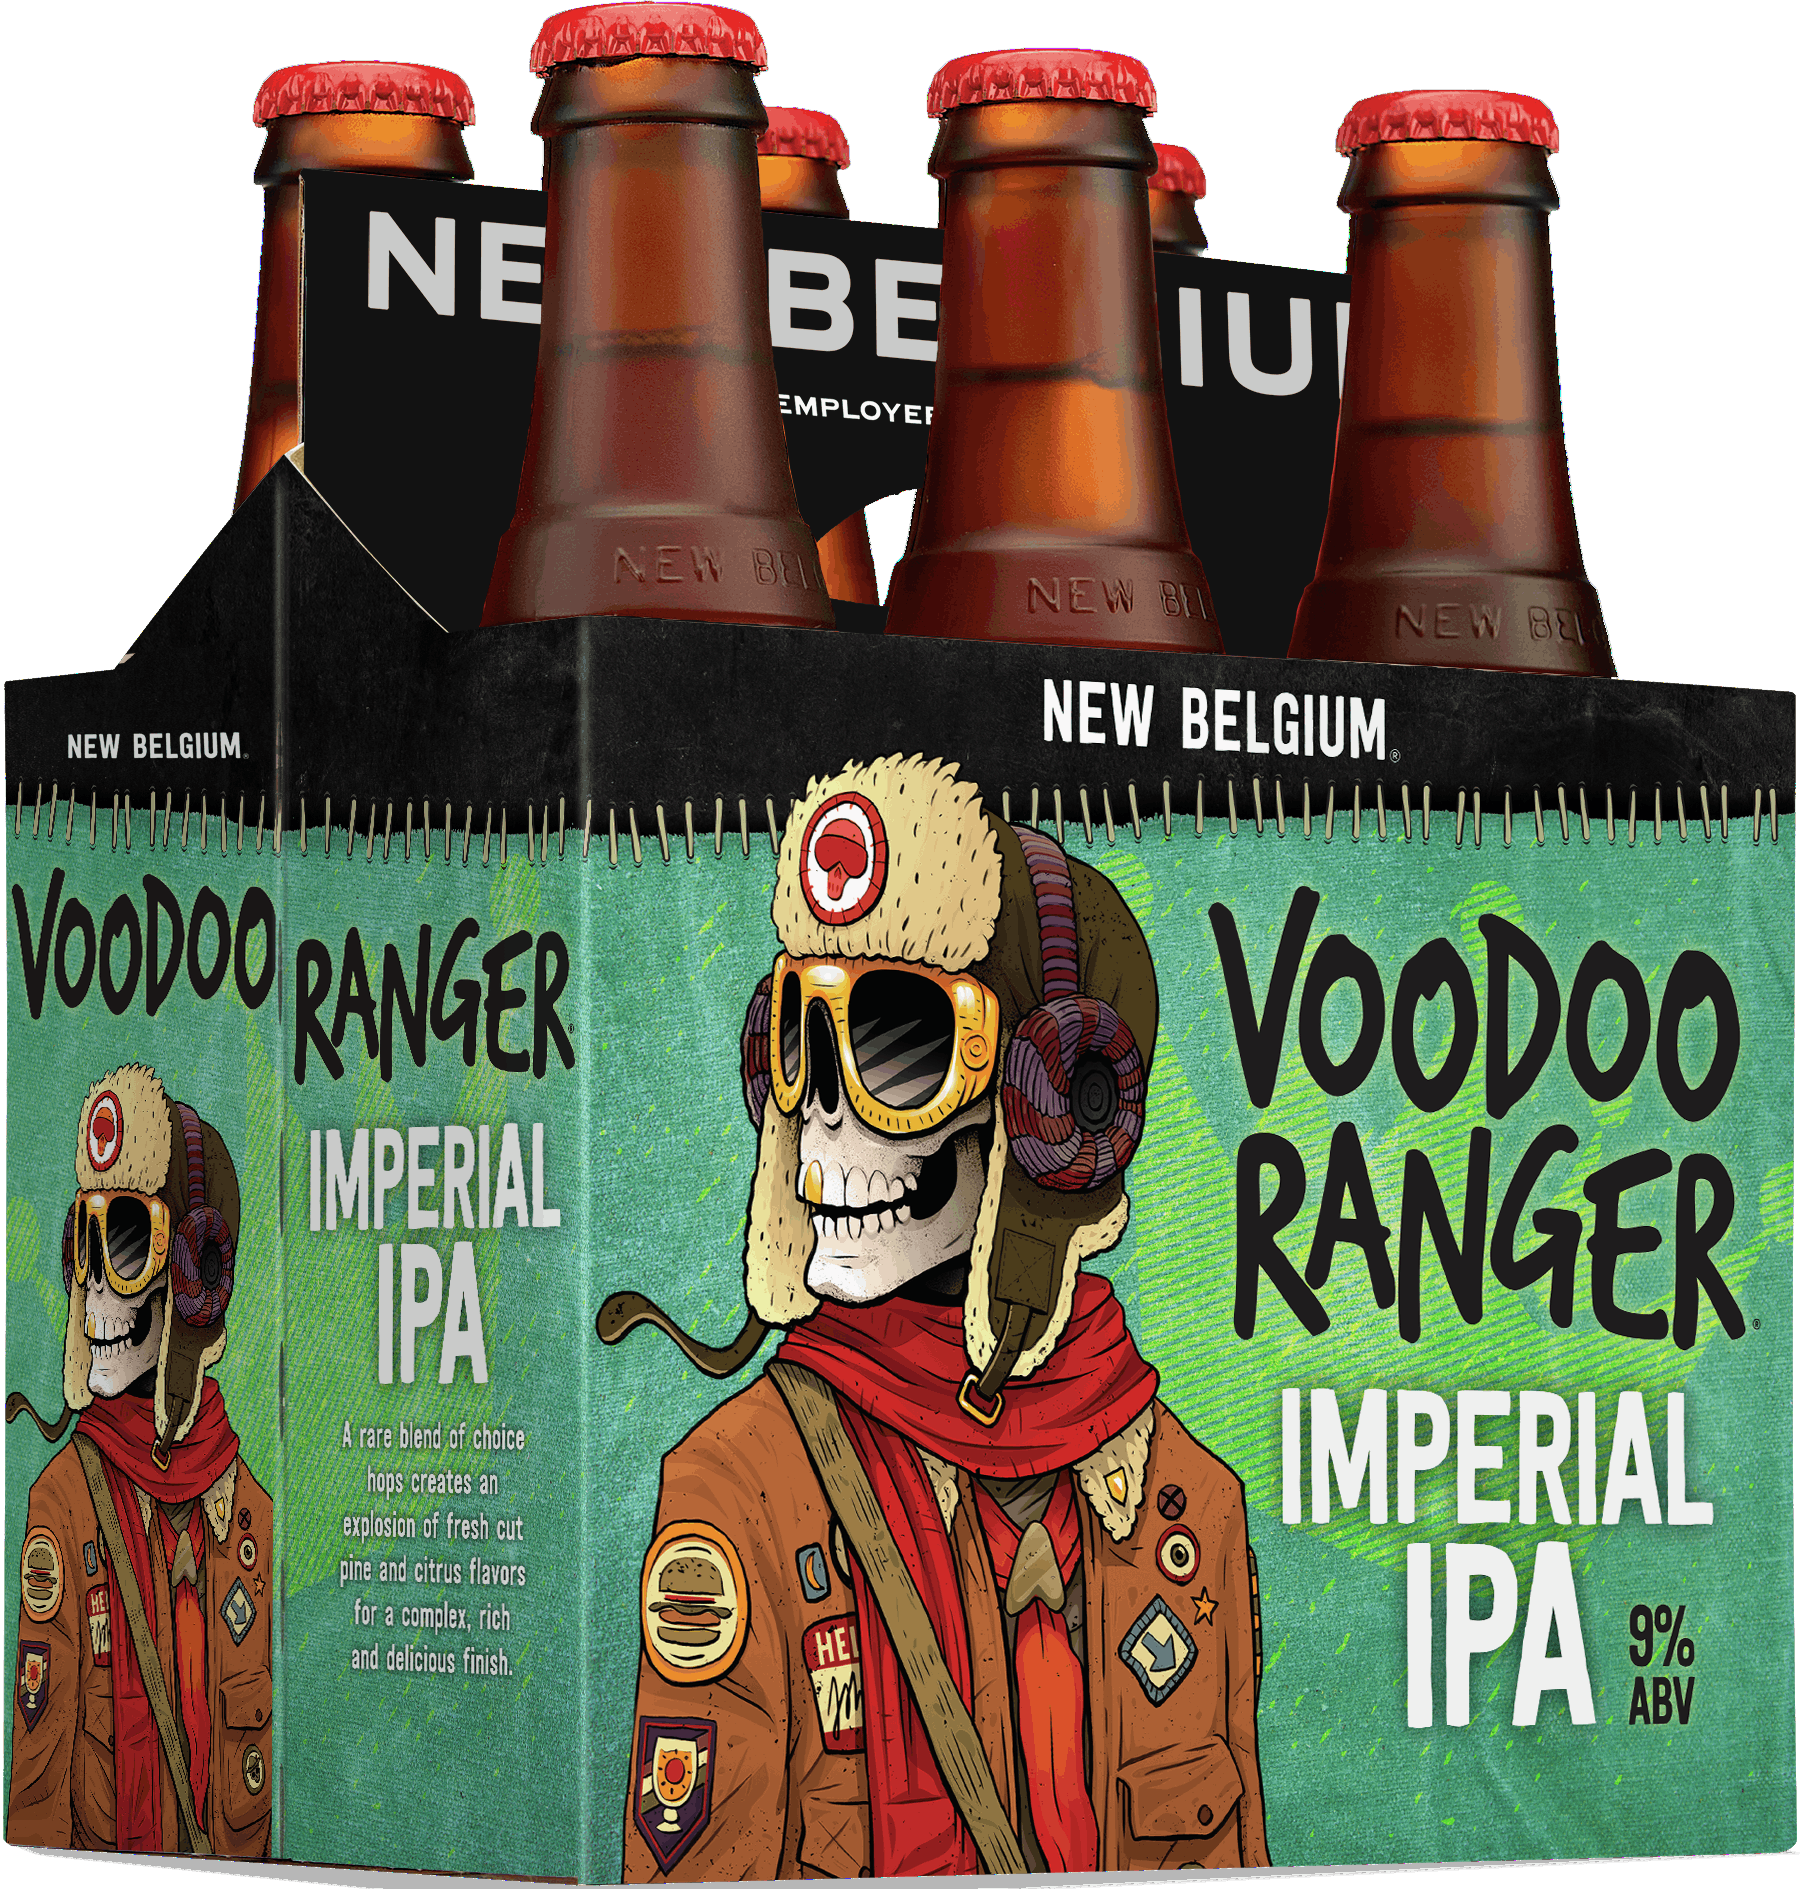 New Belgium Voodoo Ranger Imperial Total Wine Liquors